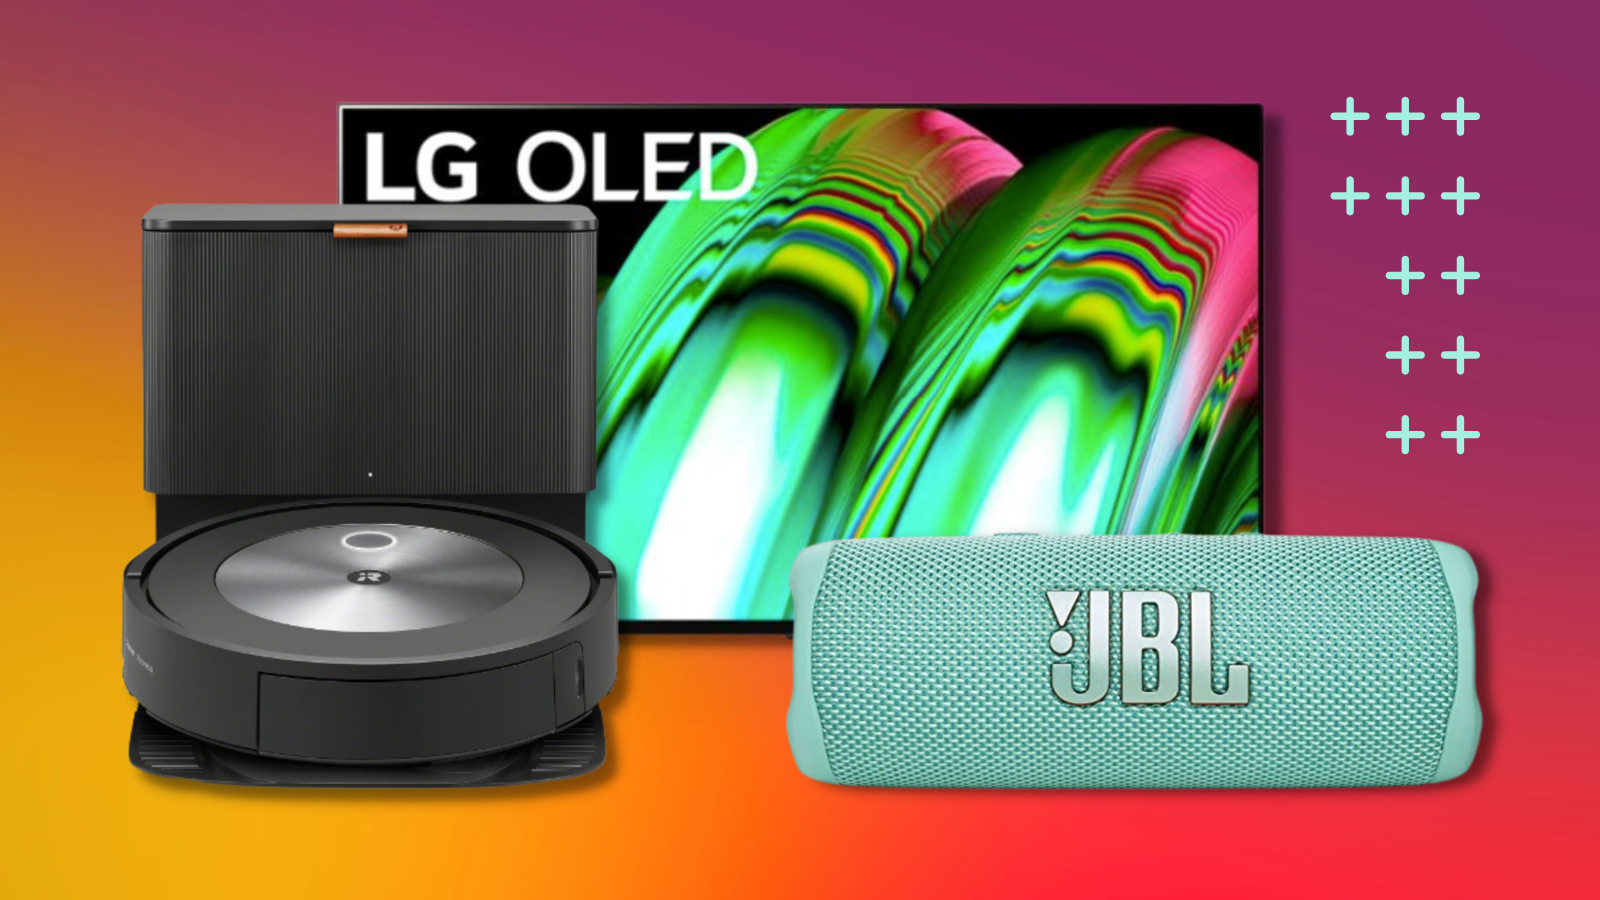 lg oled tv, roomba j7 plus, and jbl flip 6 speaker against colorful background